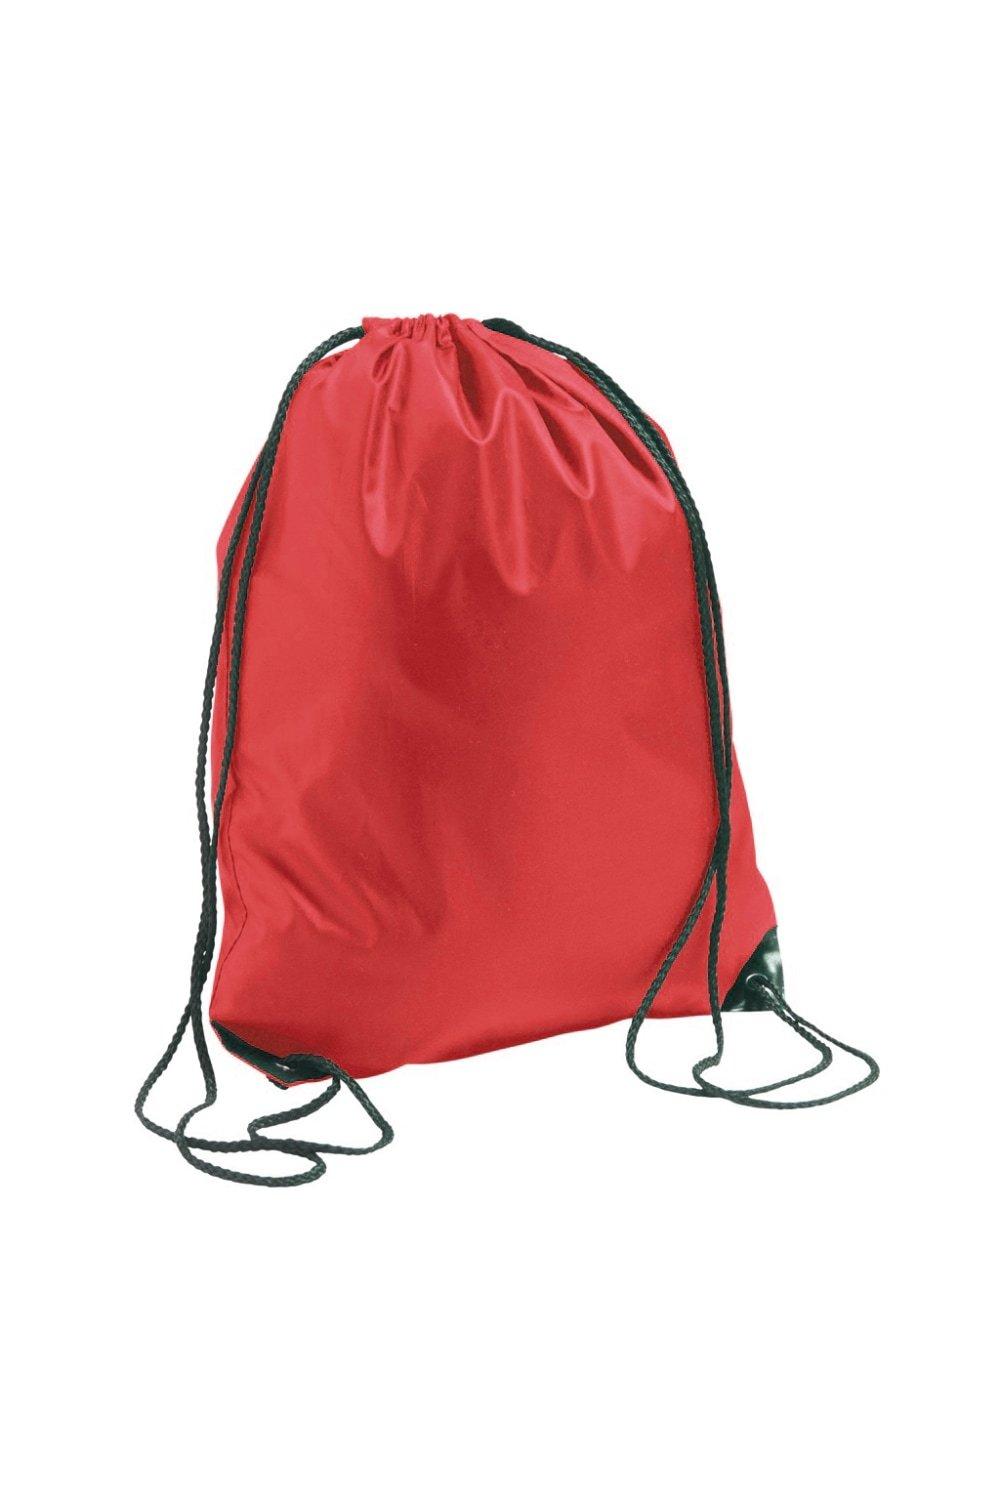 Сумка Urban Gymsac на шнурке SOL'S, красный сумка urban gymsac на шнурке sol s коралл